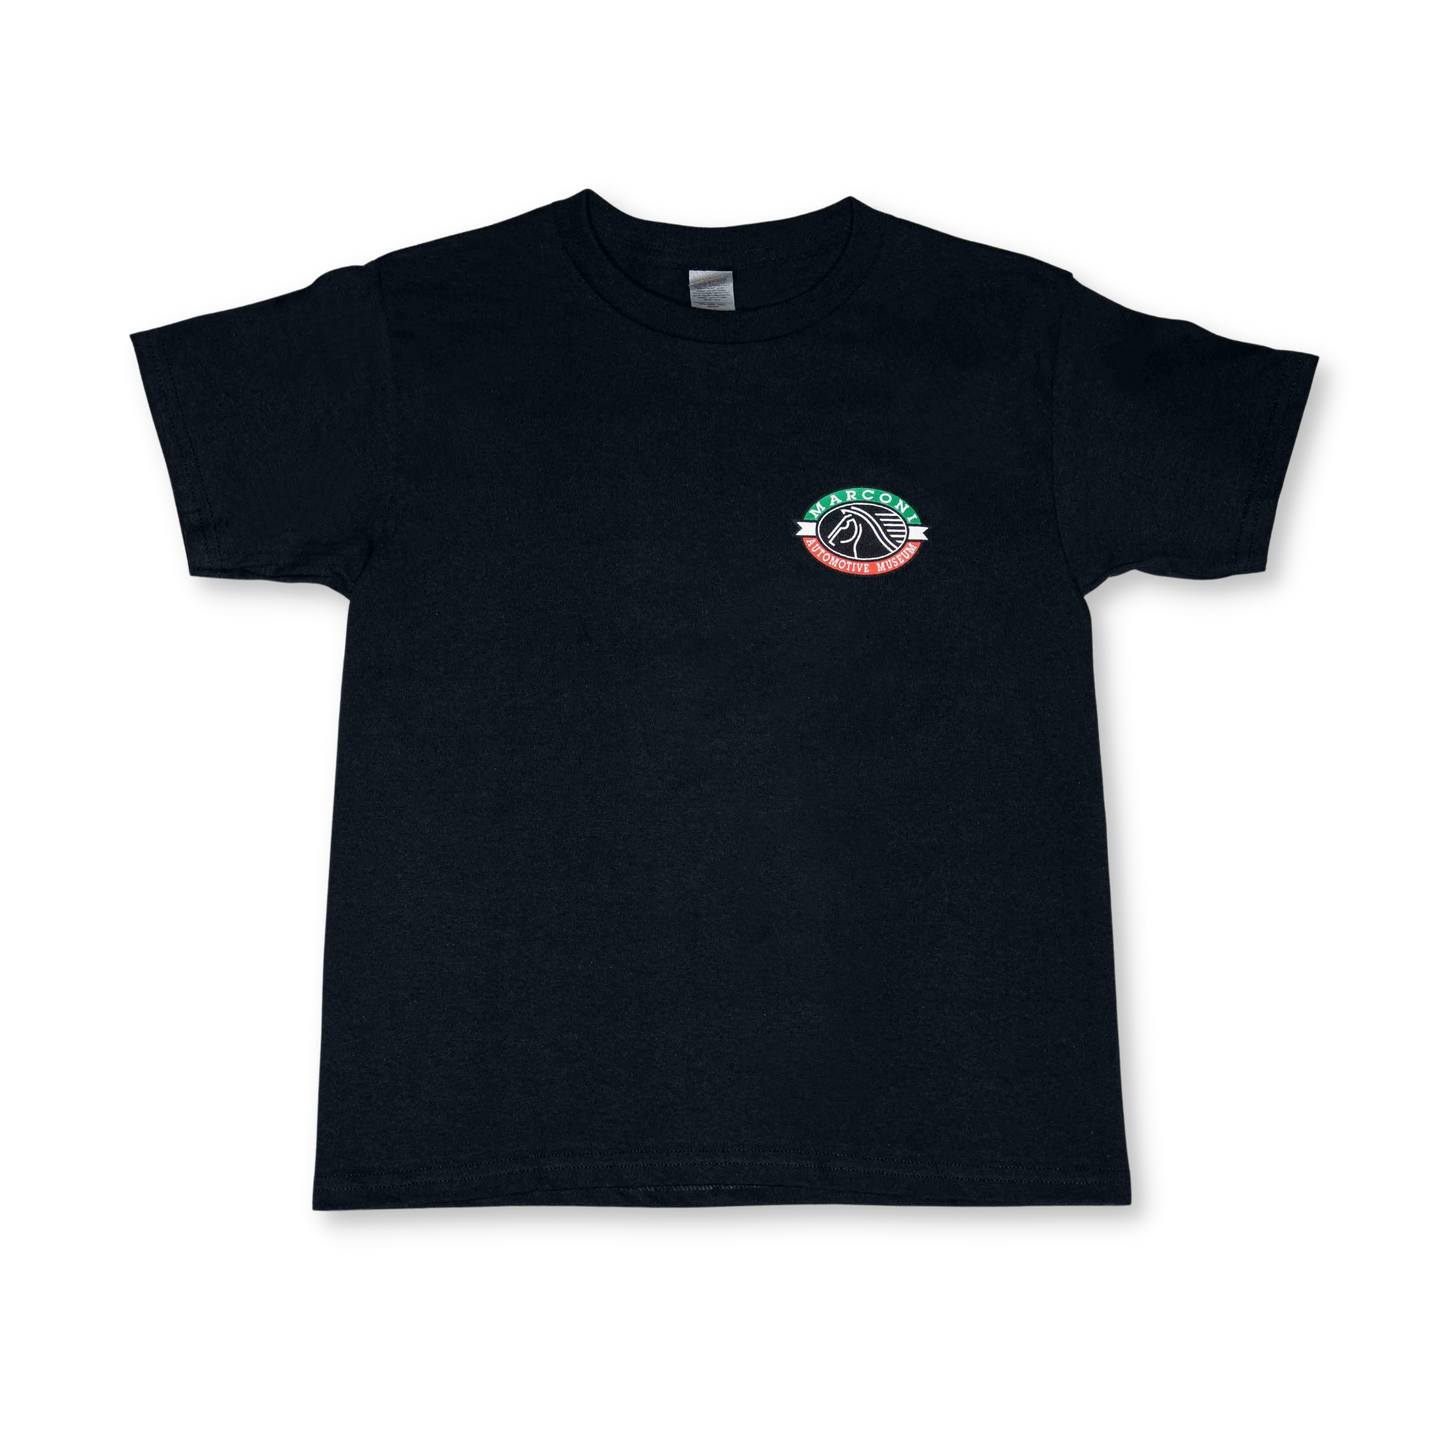 NEW - Marconi Museum Kids T-Shirt - Black